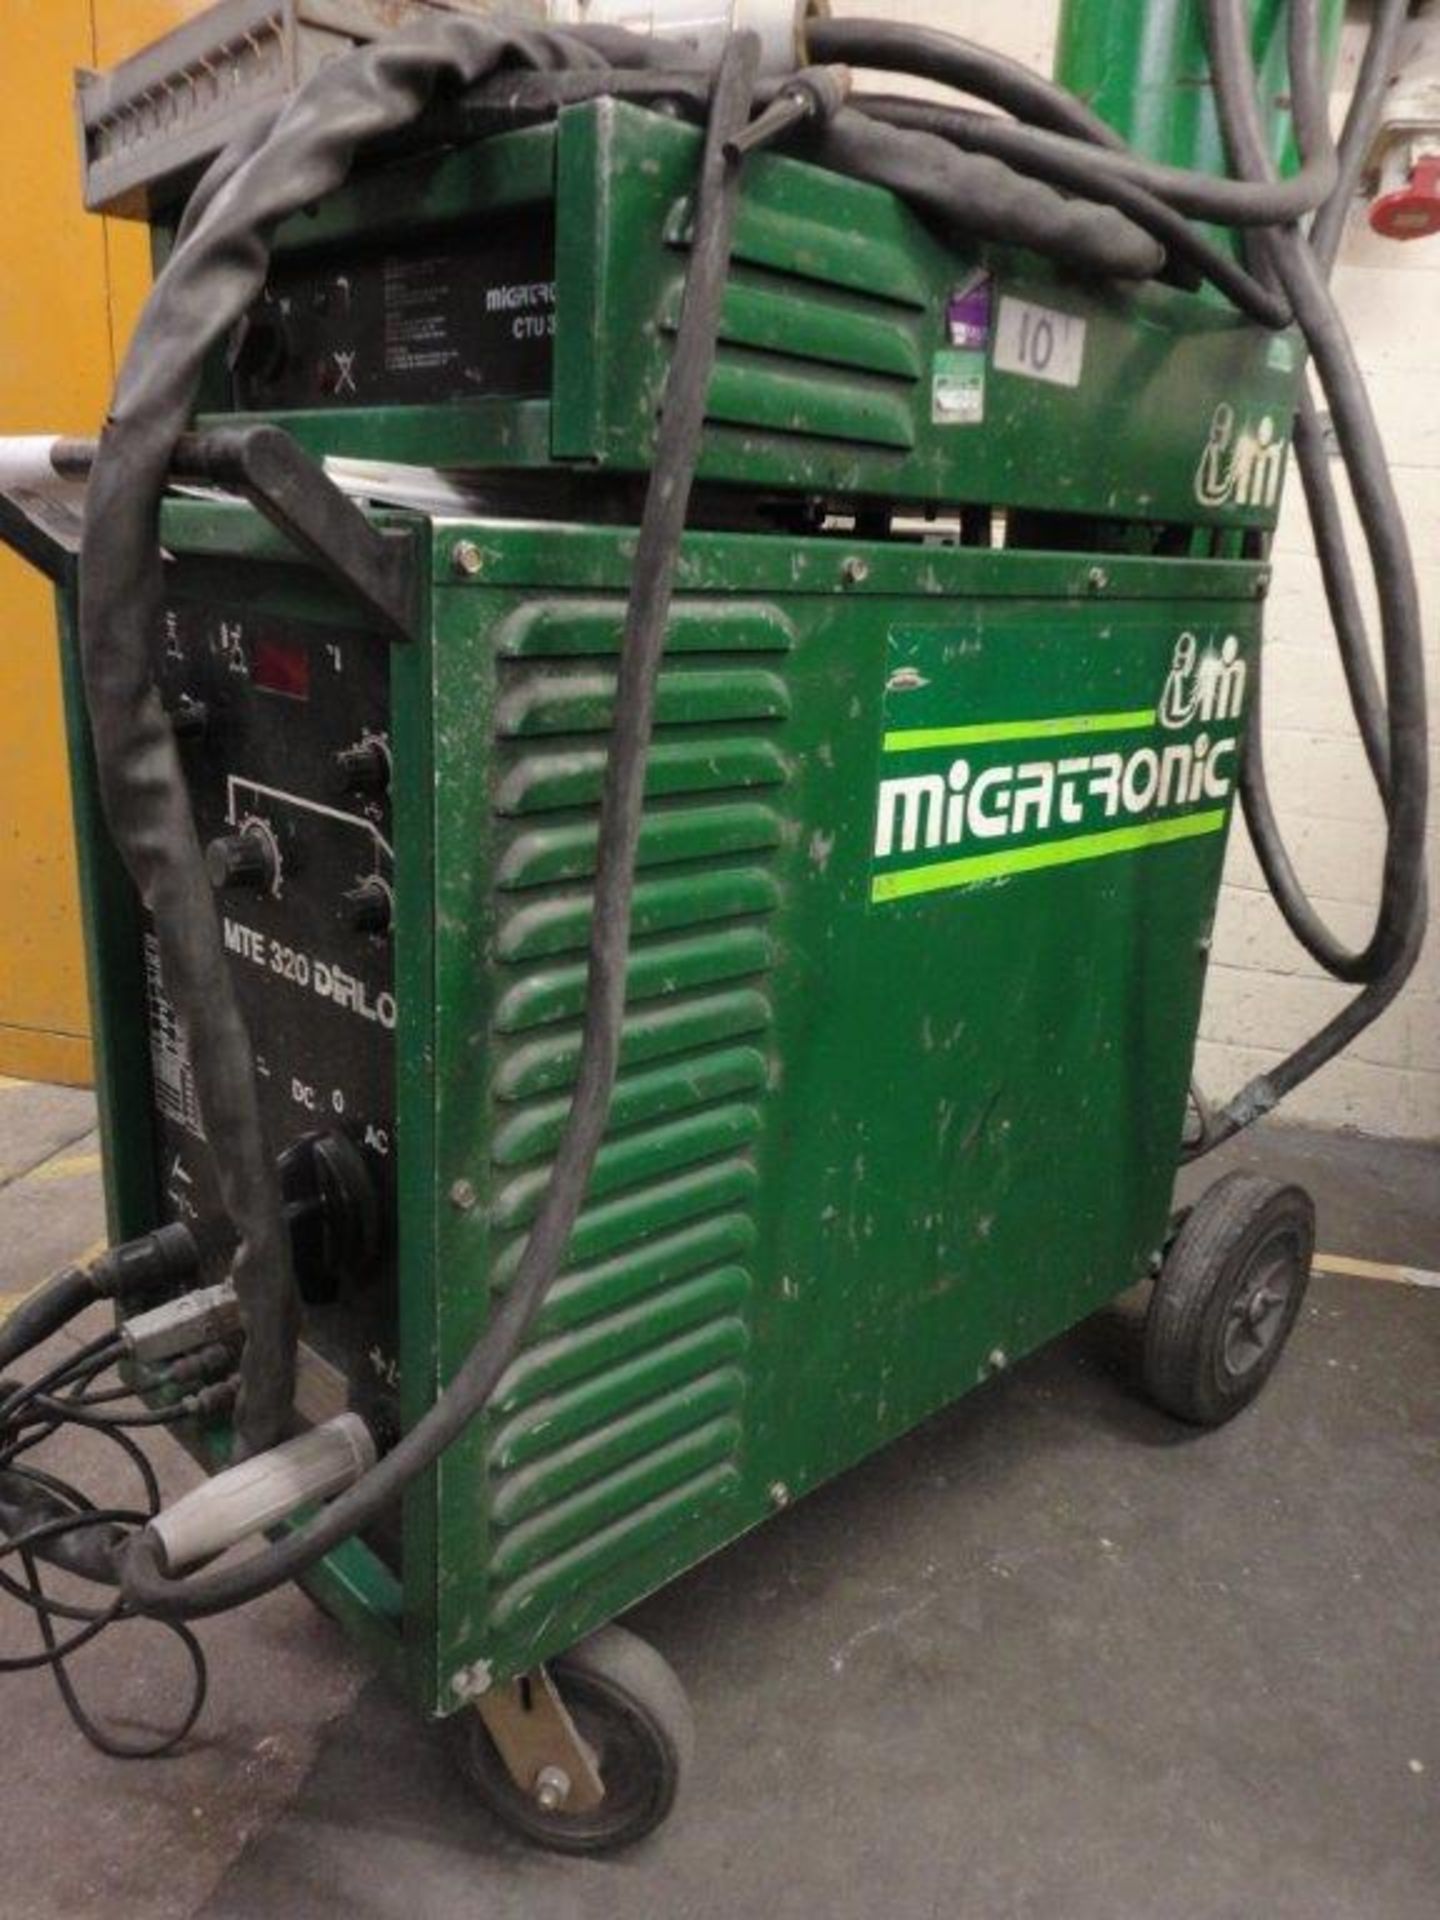 Migatronic MTE 320 dialog AC /DC TIG welder with CTU3000 cooler, torch & rods. 415v